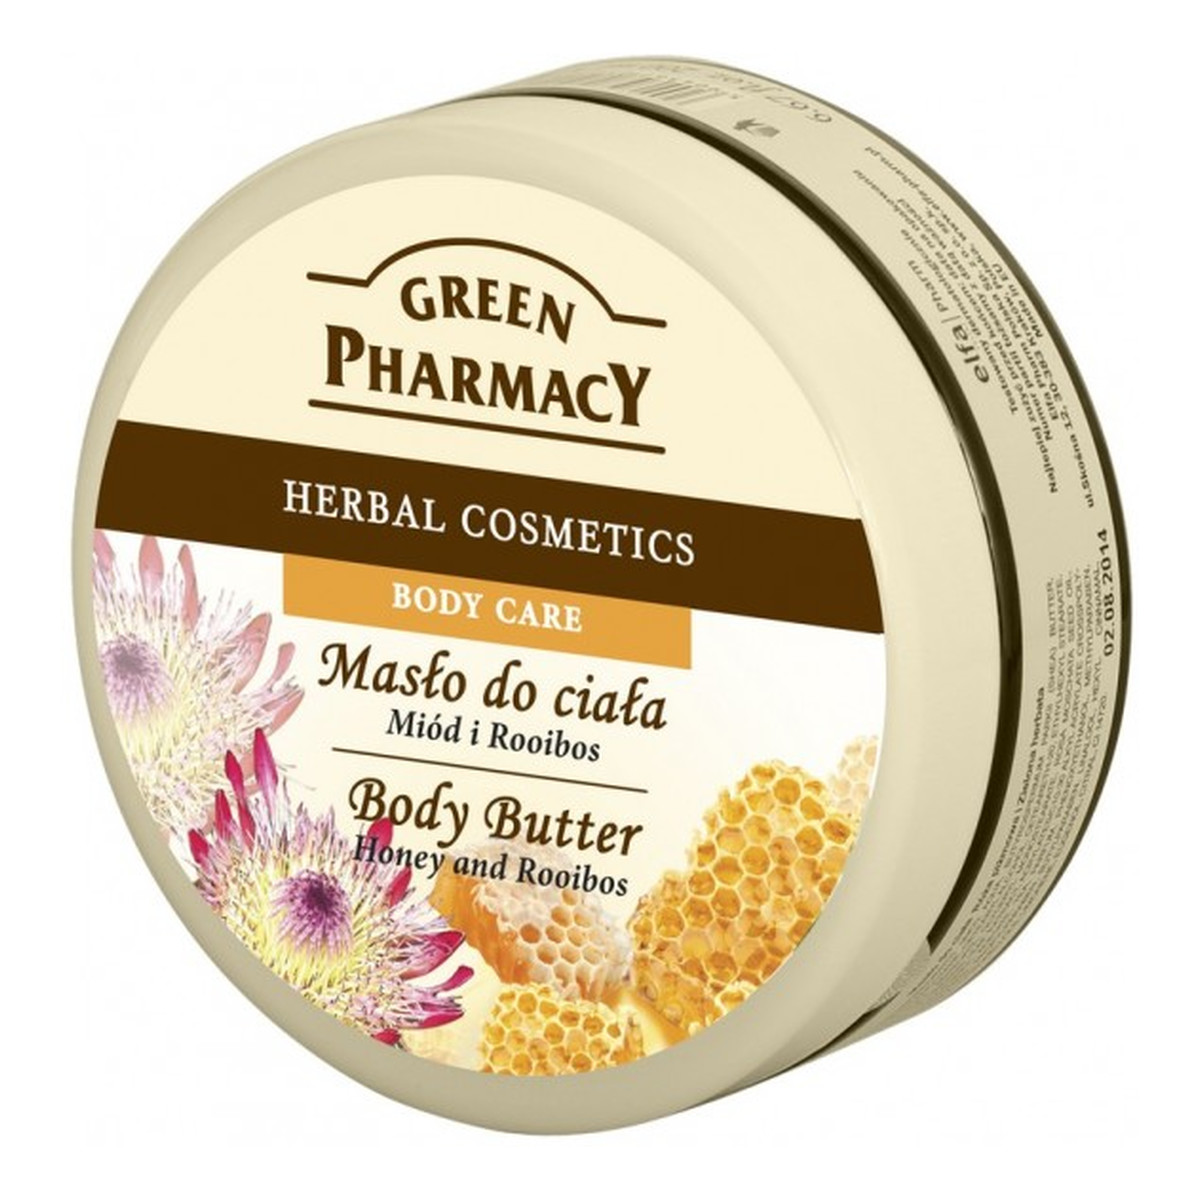 Green Pharmacy Herbal Cosmetics Body Care Masło Do Ciała Miód i Rooibos 200ml